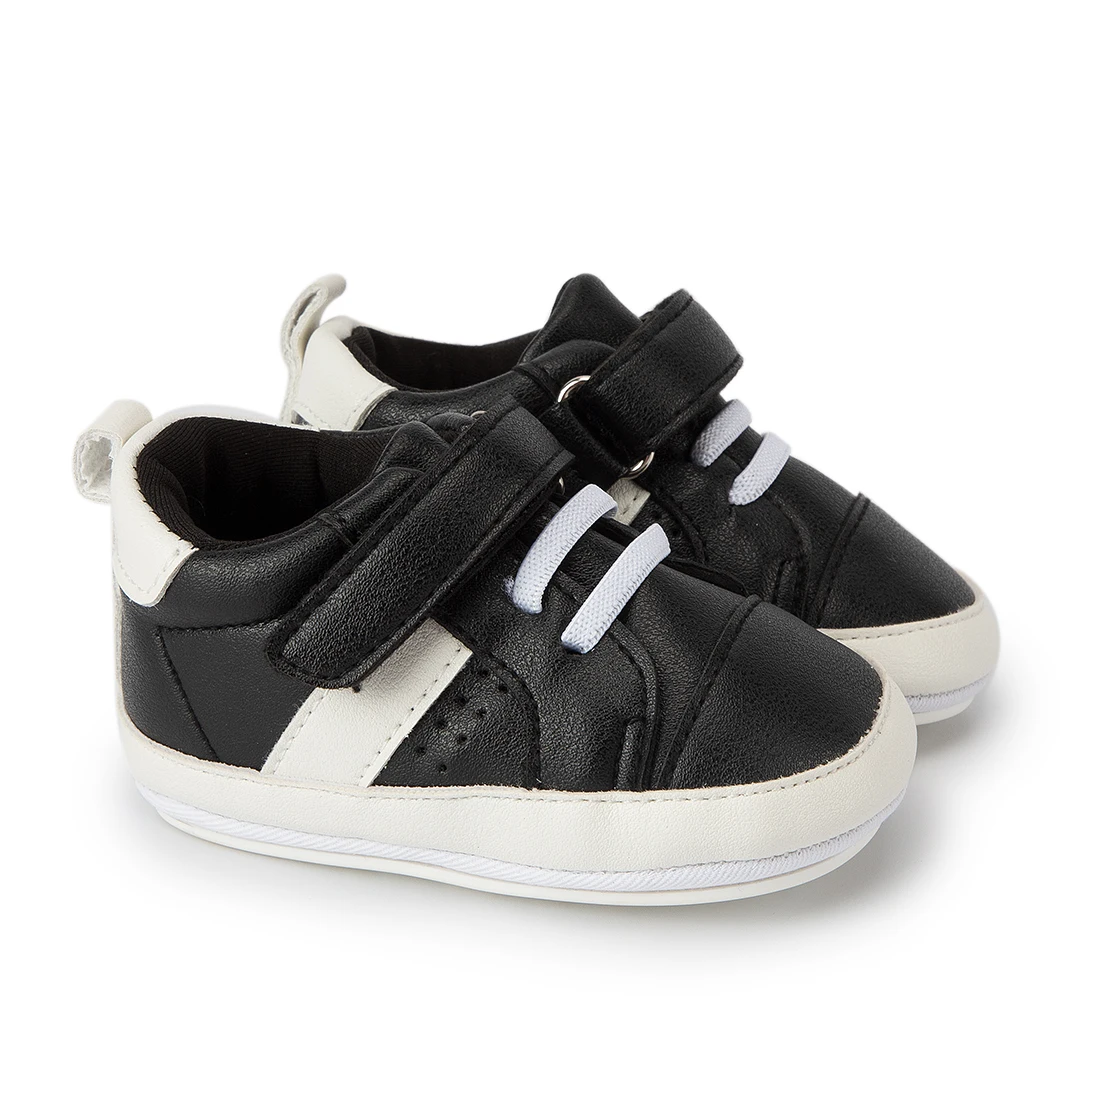 Rubber sole new designed pu upper First walker sneaker sport casual boy baby shoes